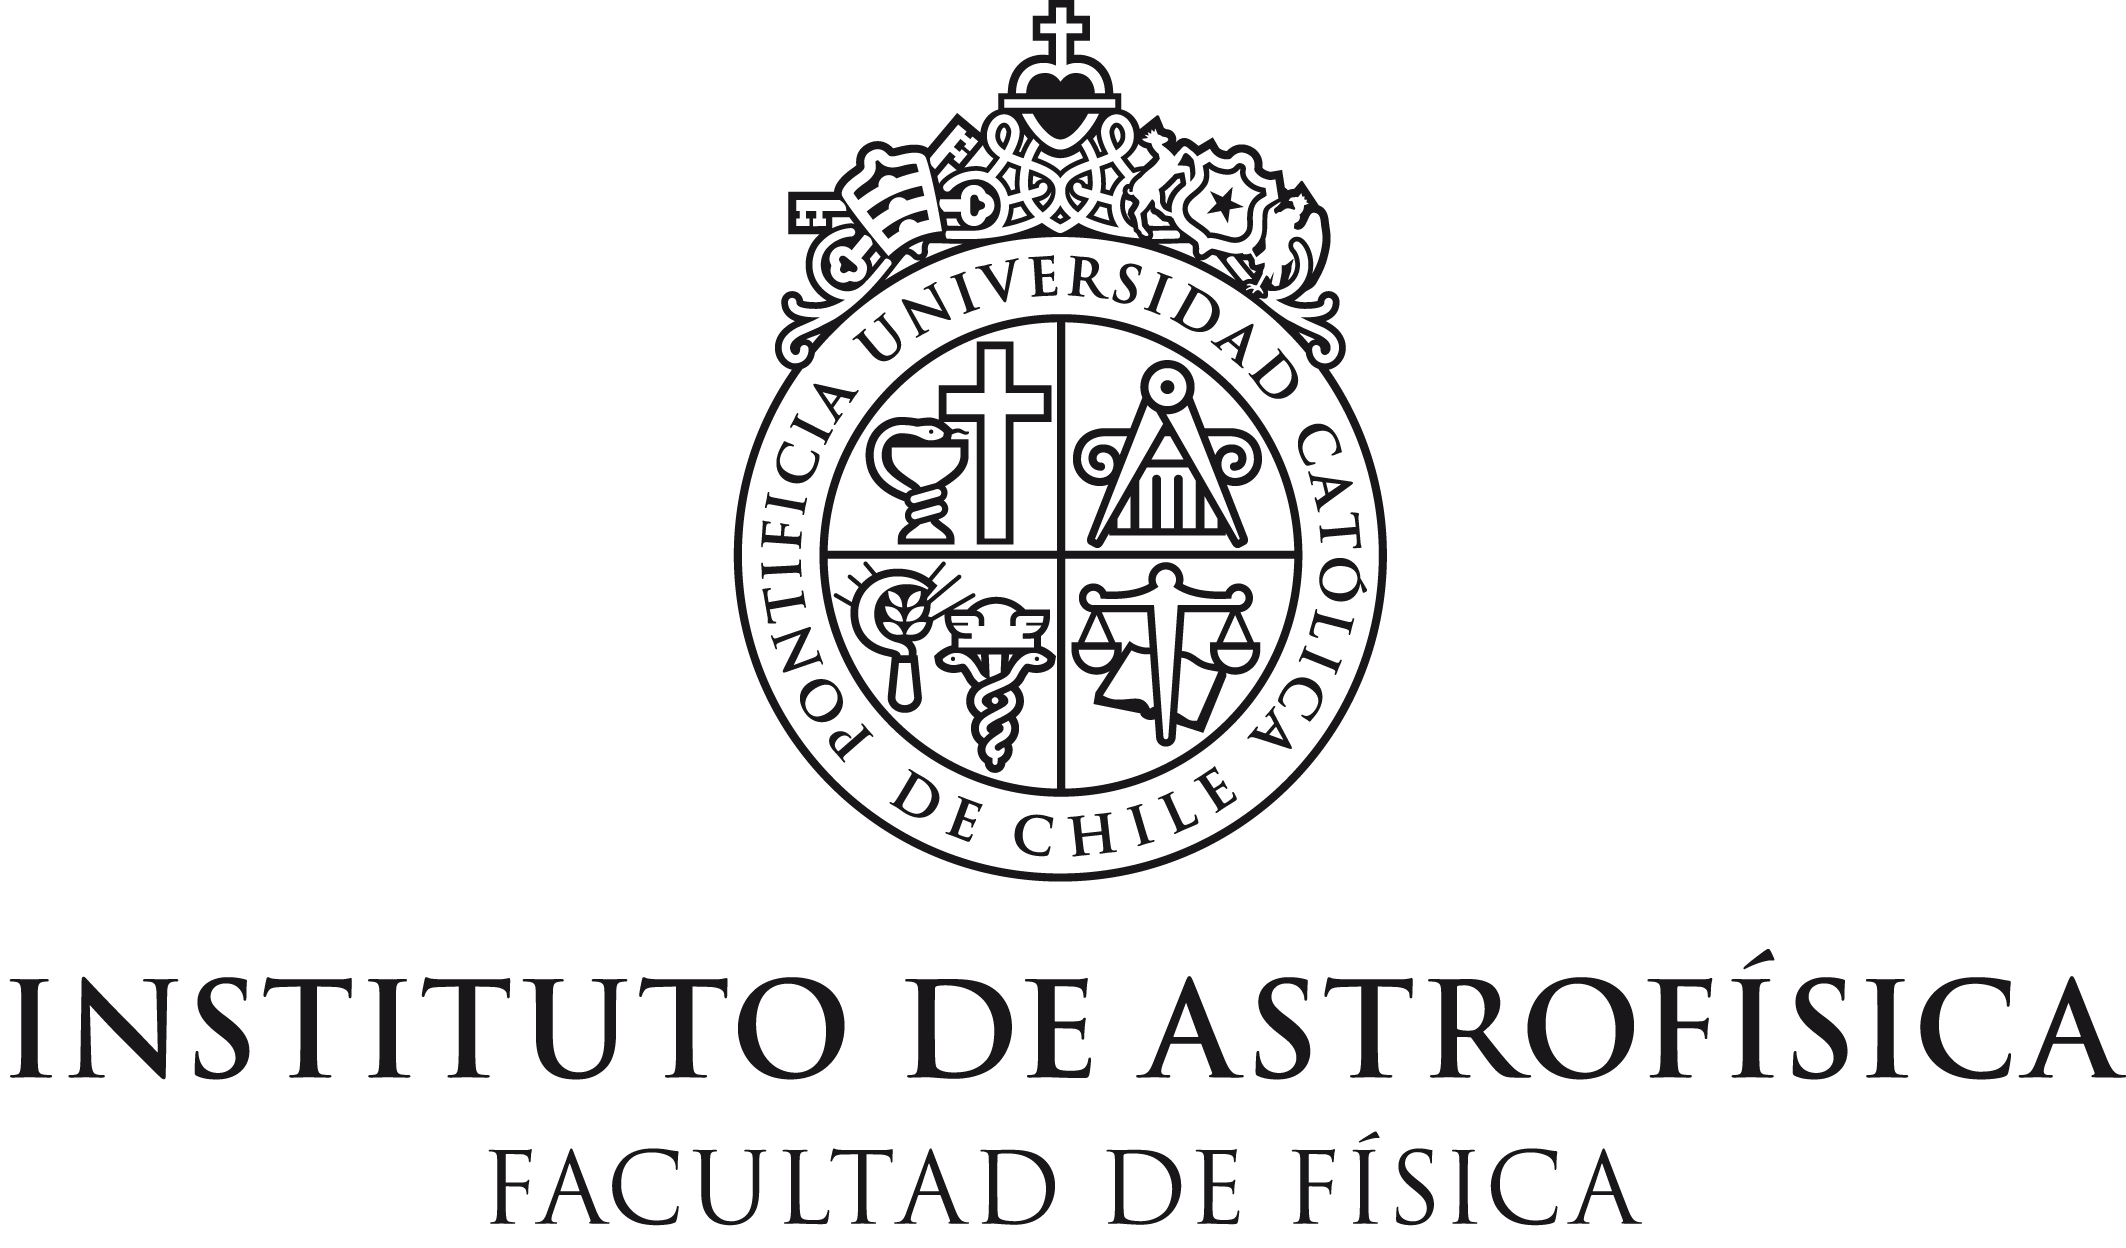 Instituto de Astrofísica, Pontificia Universidad Católica de Chile logo